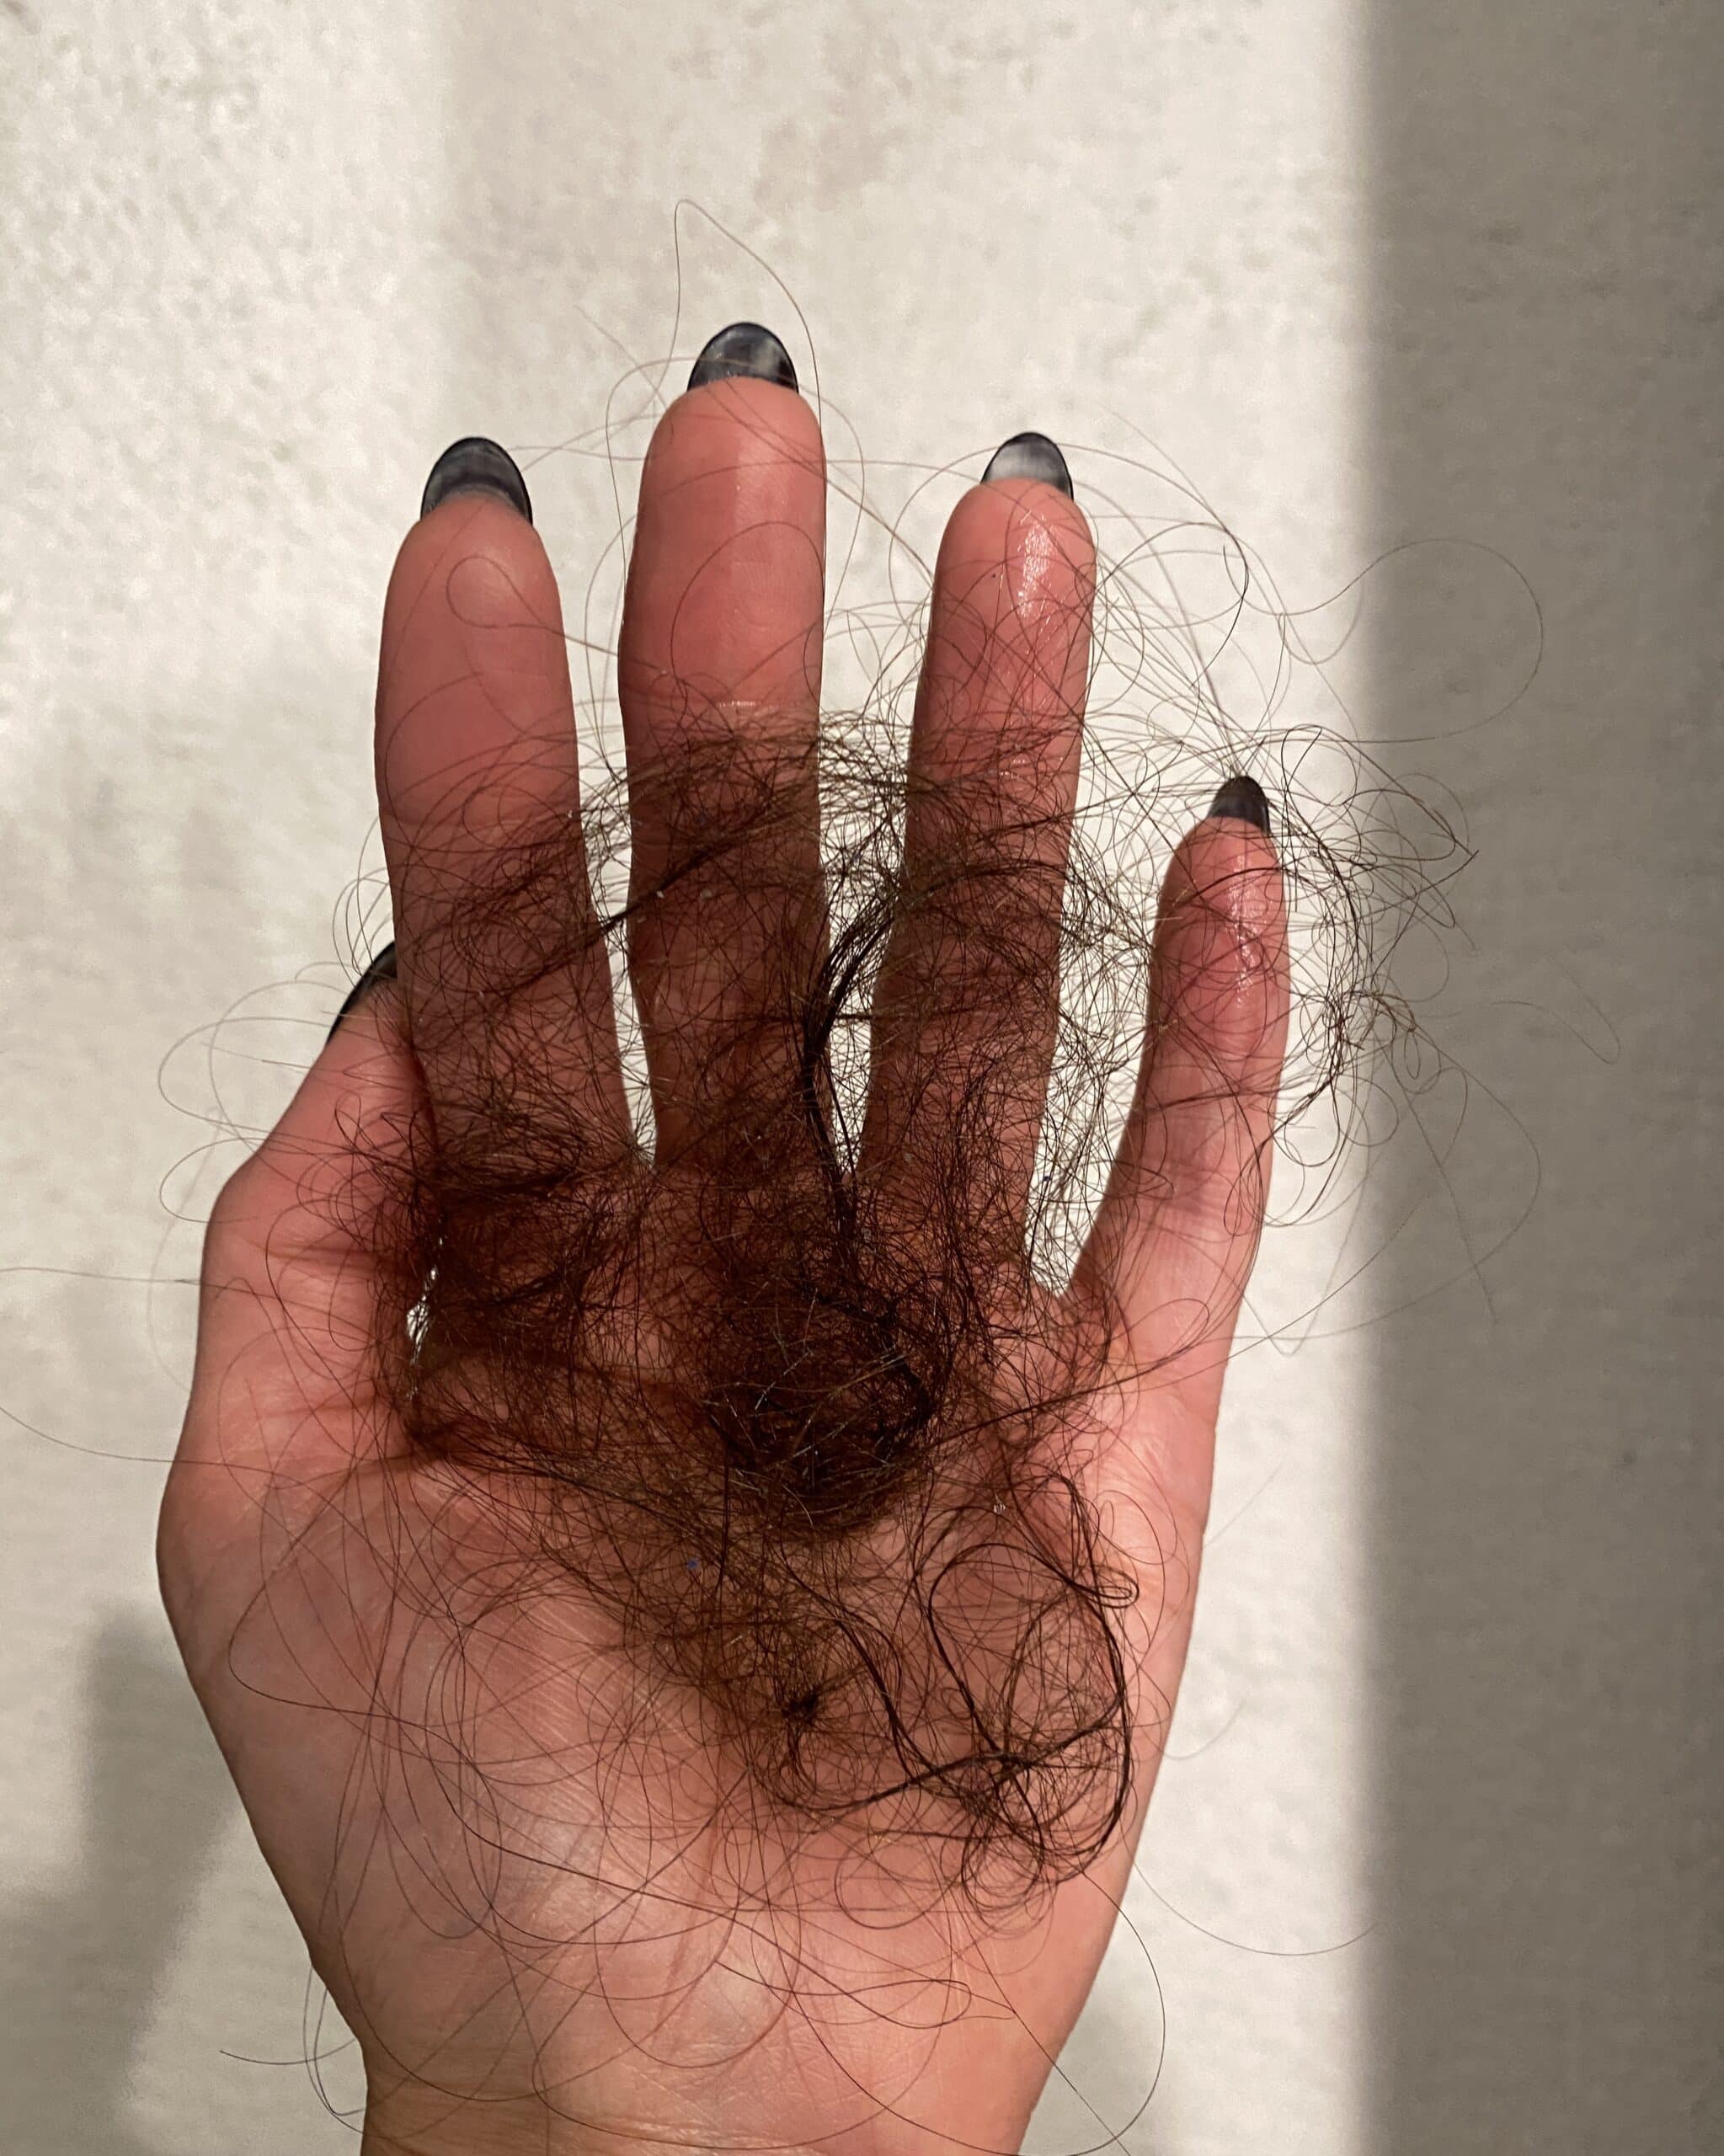 HAIR LOSS DURING A RECENT HASHIMOTO'S FLAREUP 